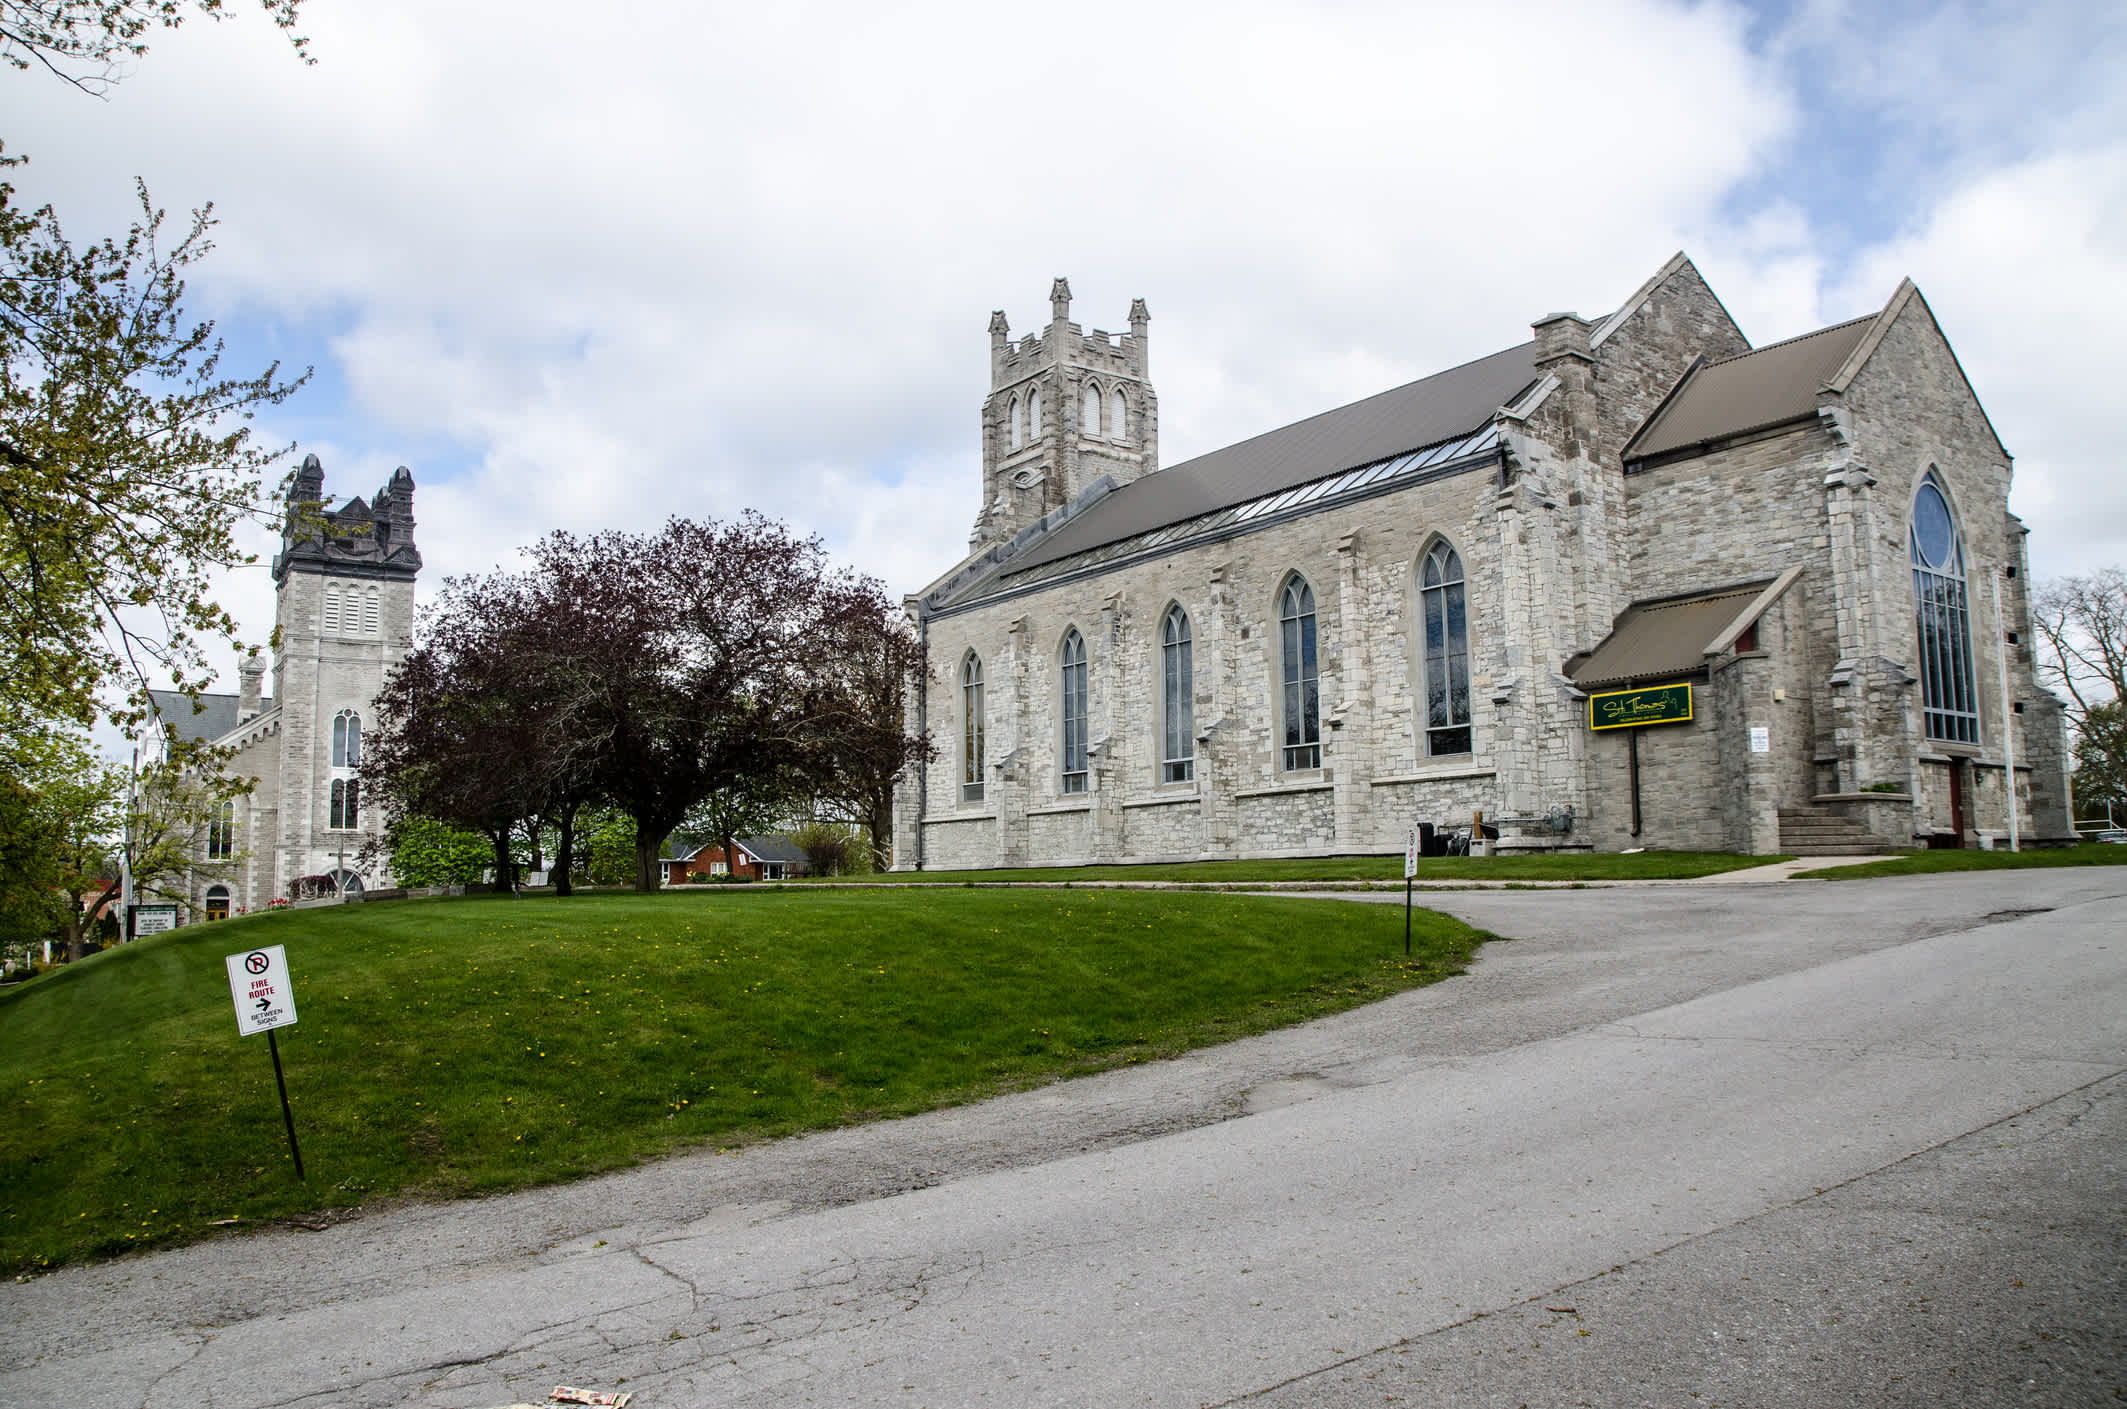 Blick auf den St. Thomas Kirche in Belleville, Ontario, Kanada. 

